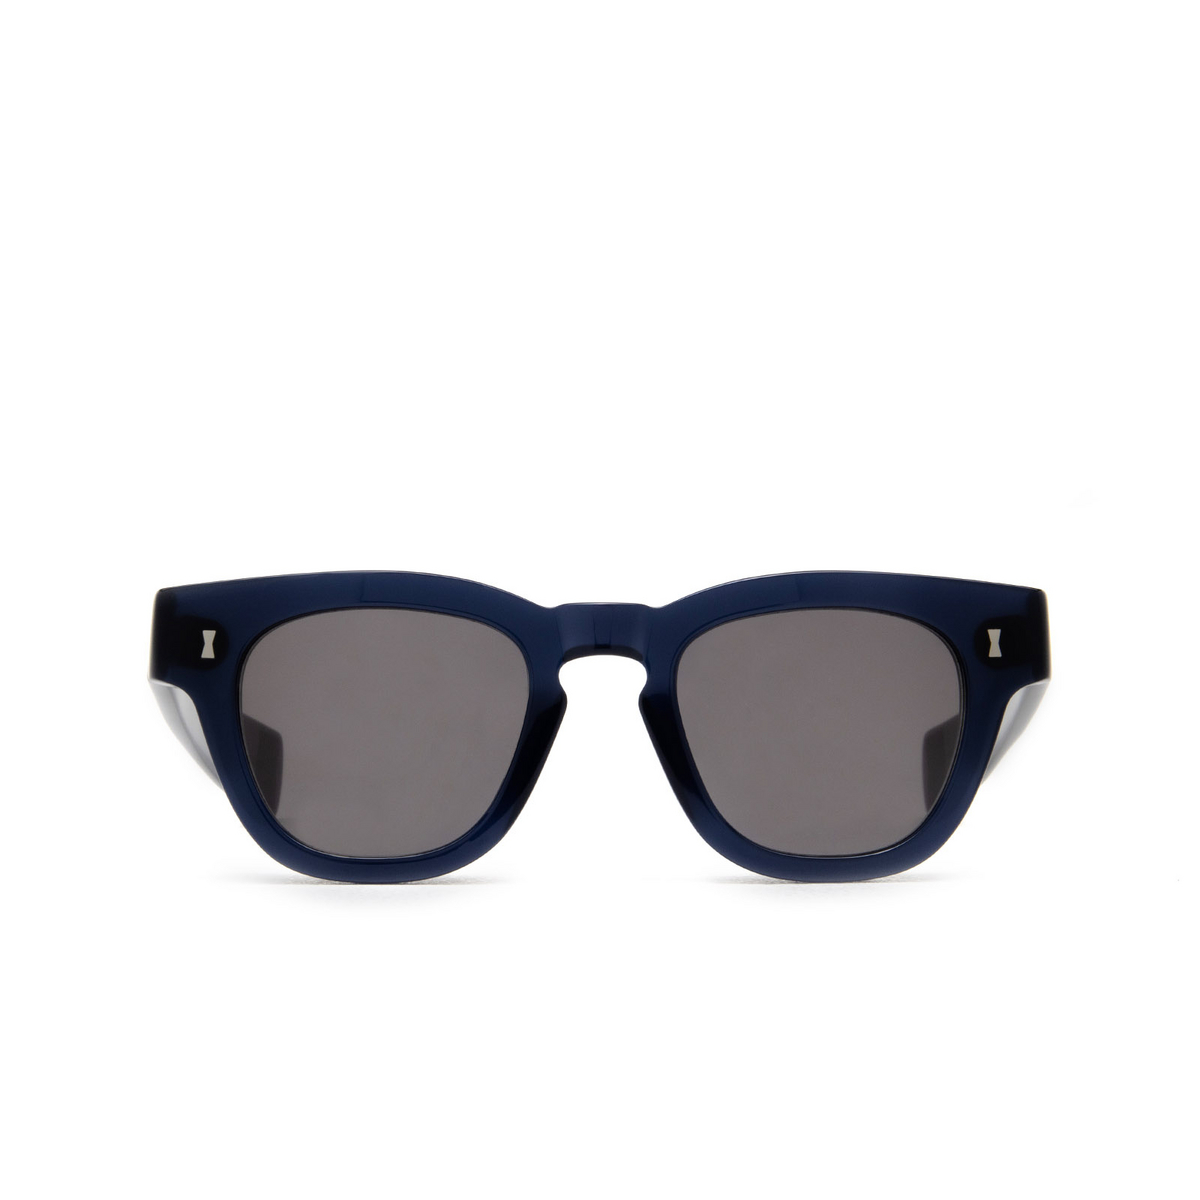 Cubitts CRUIKSHANK Sunglasses CRU-R-BLU Blue - front view